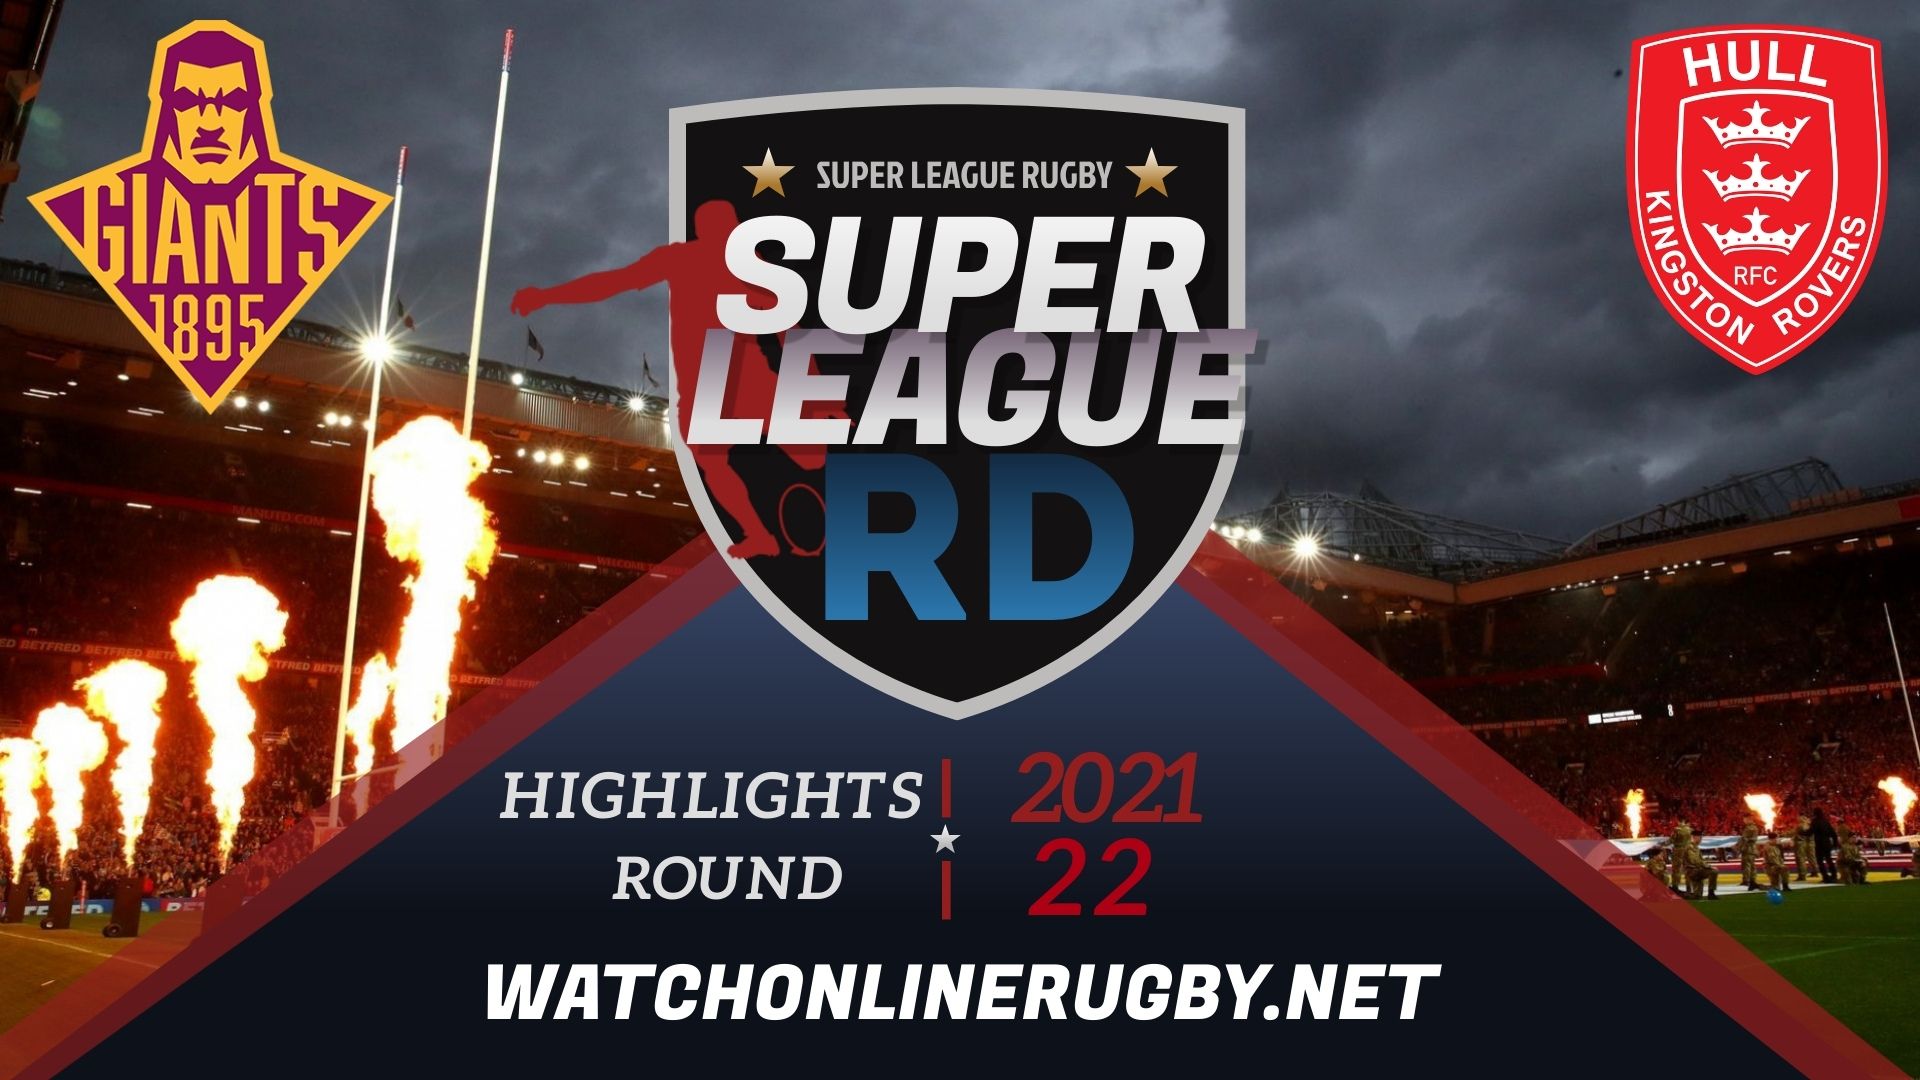 Huddersfield Giants Vs Hull KR Super League Rugby 2021 RD 22